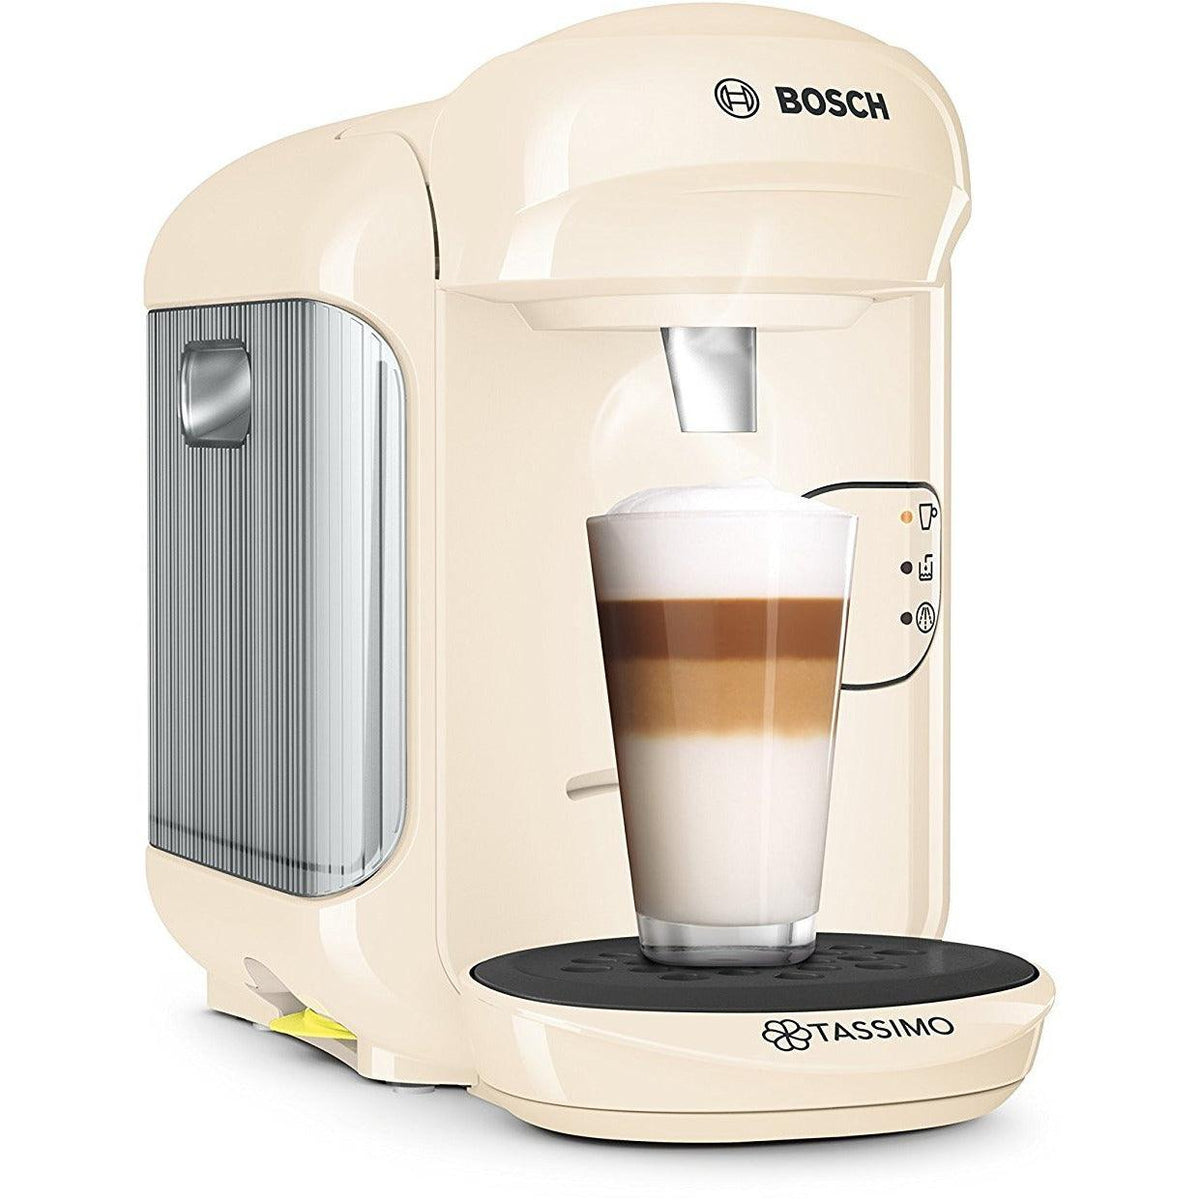 Tassimo Vivy 2 0.7L Pod Coffee Machine - Cream | TAS1407GB from DID Electrical - guaranteed Irish, guaranteed quality service. (6890765287612)